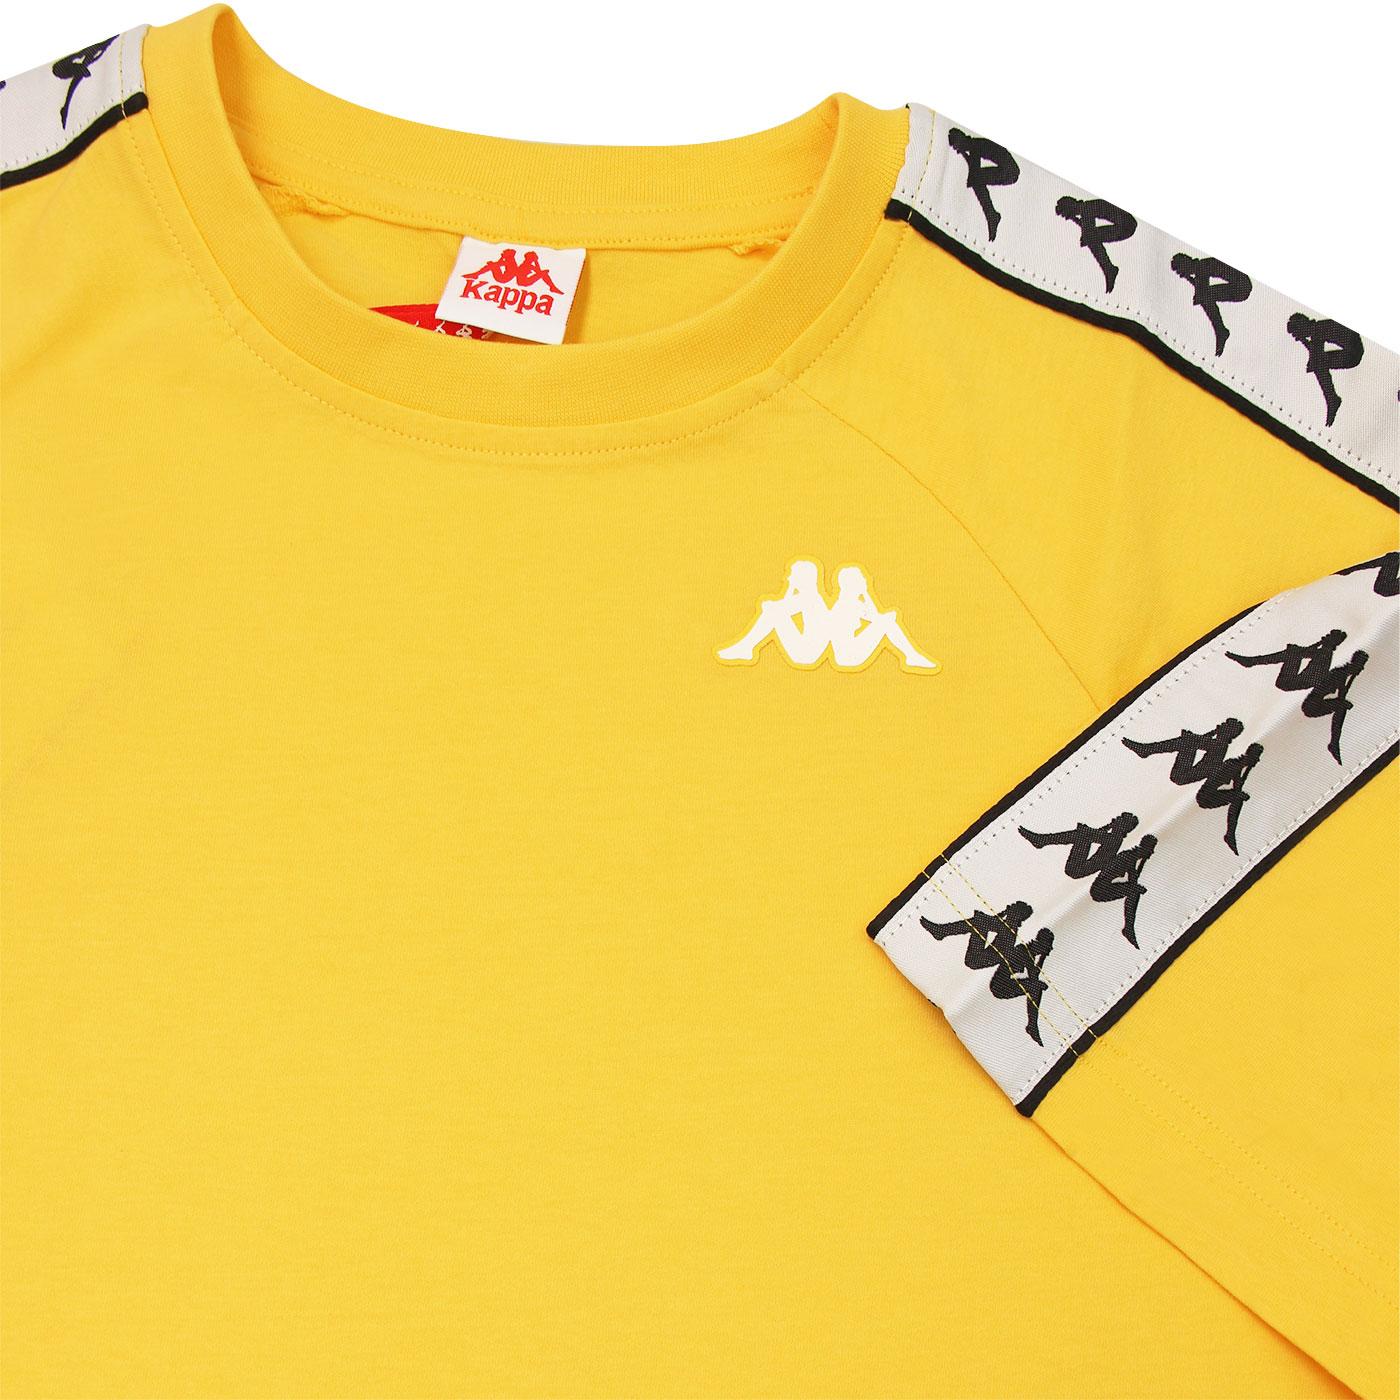 KAPPA Coen Men's Retro 1980s Tape Sleeve T-Shirt in Yellow